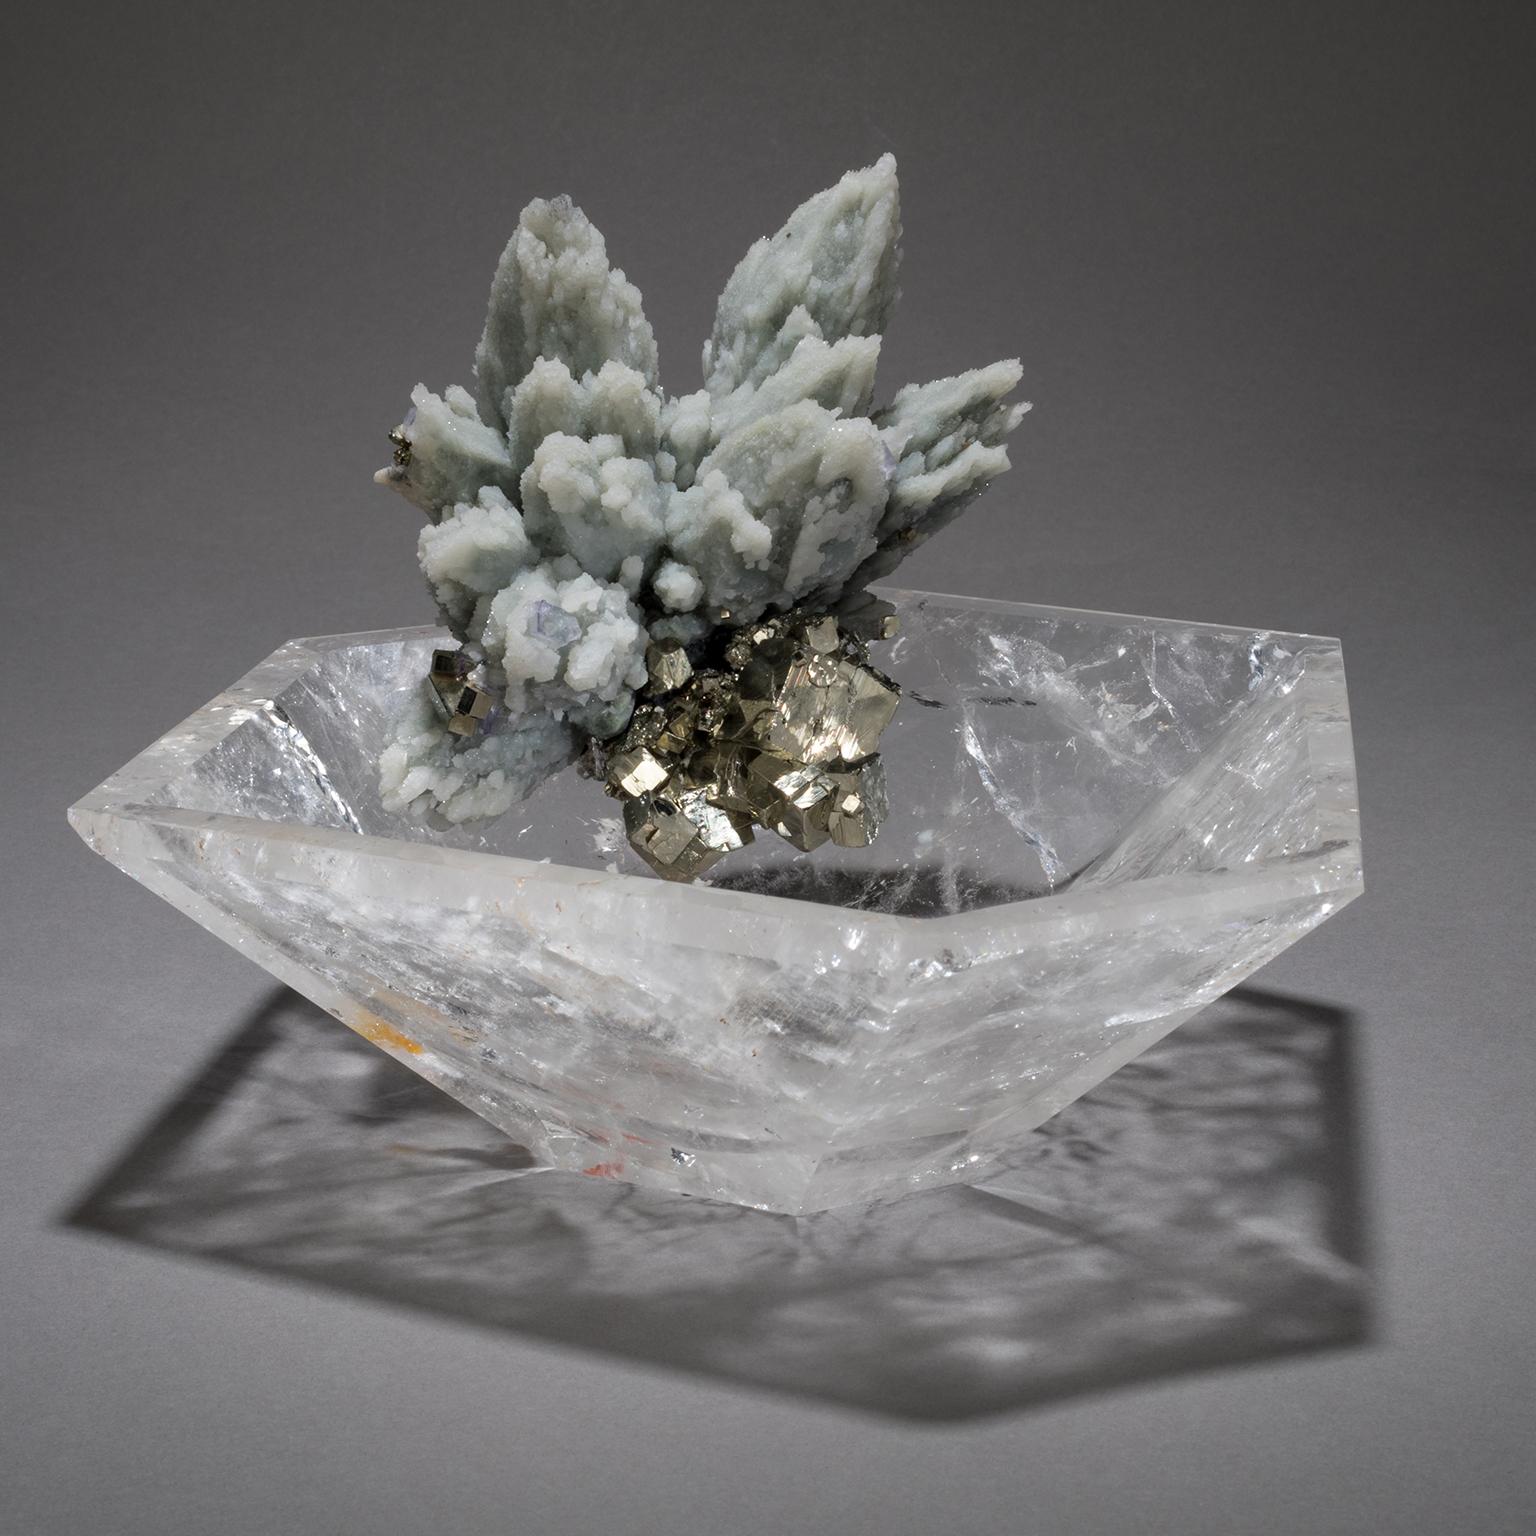 American Studio Greytak 'Crystal Bling Bowl 11' Hand Carved Quartz, Blue Quartz, & Pyrite